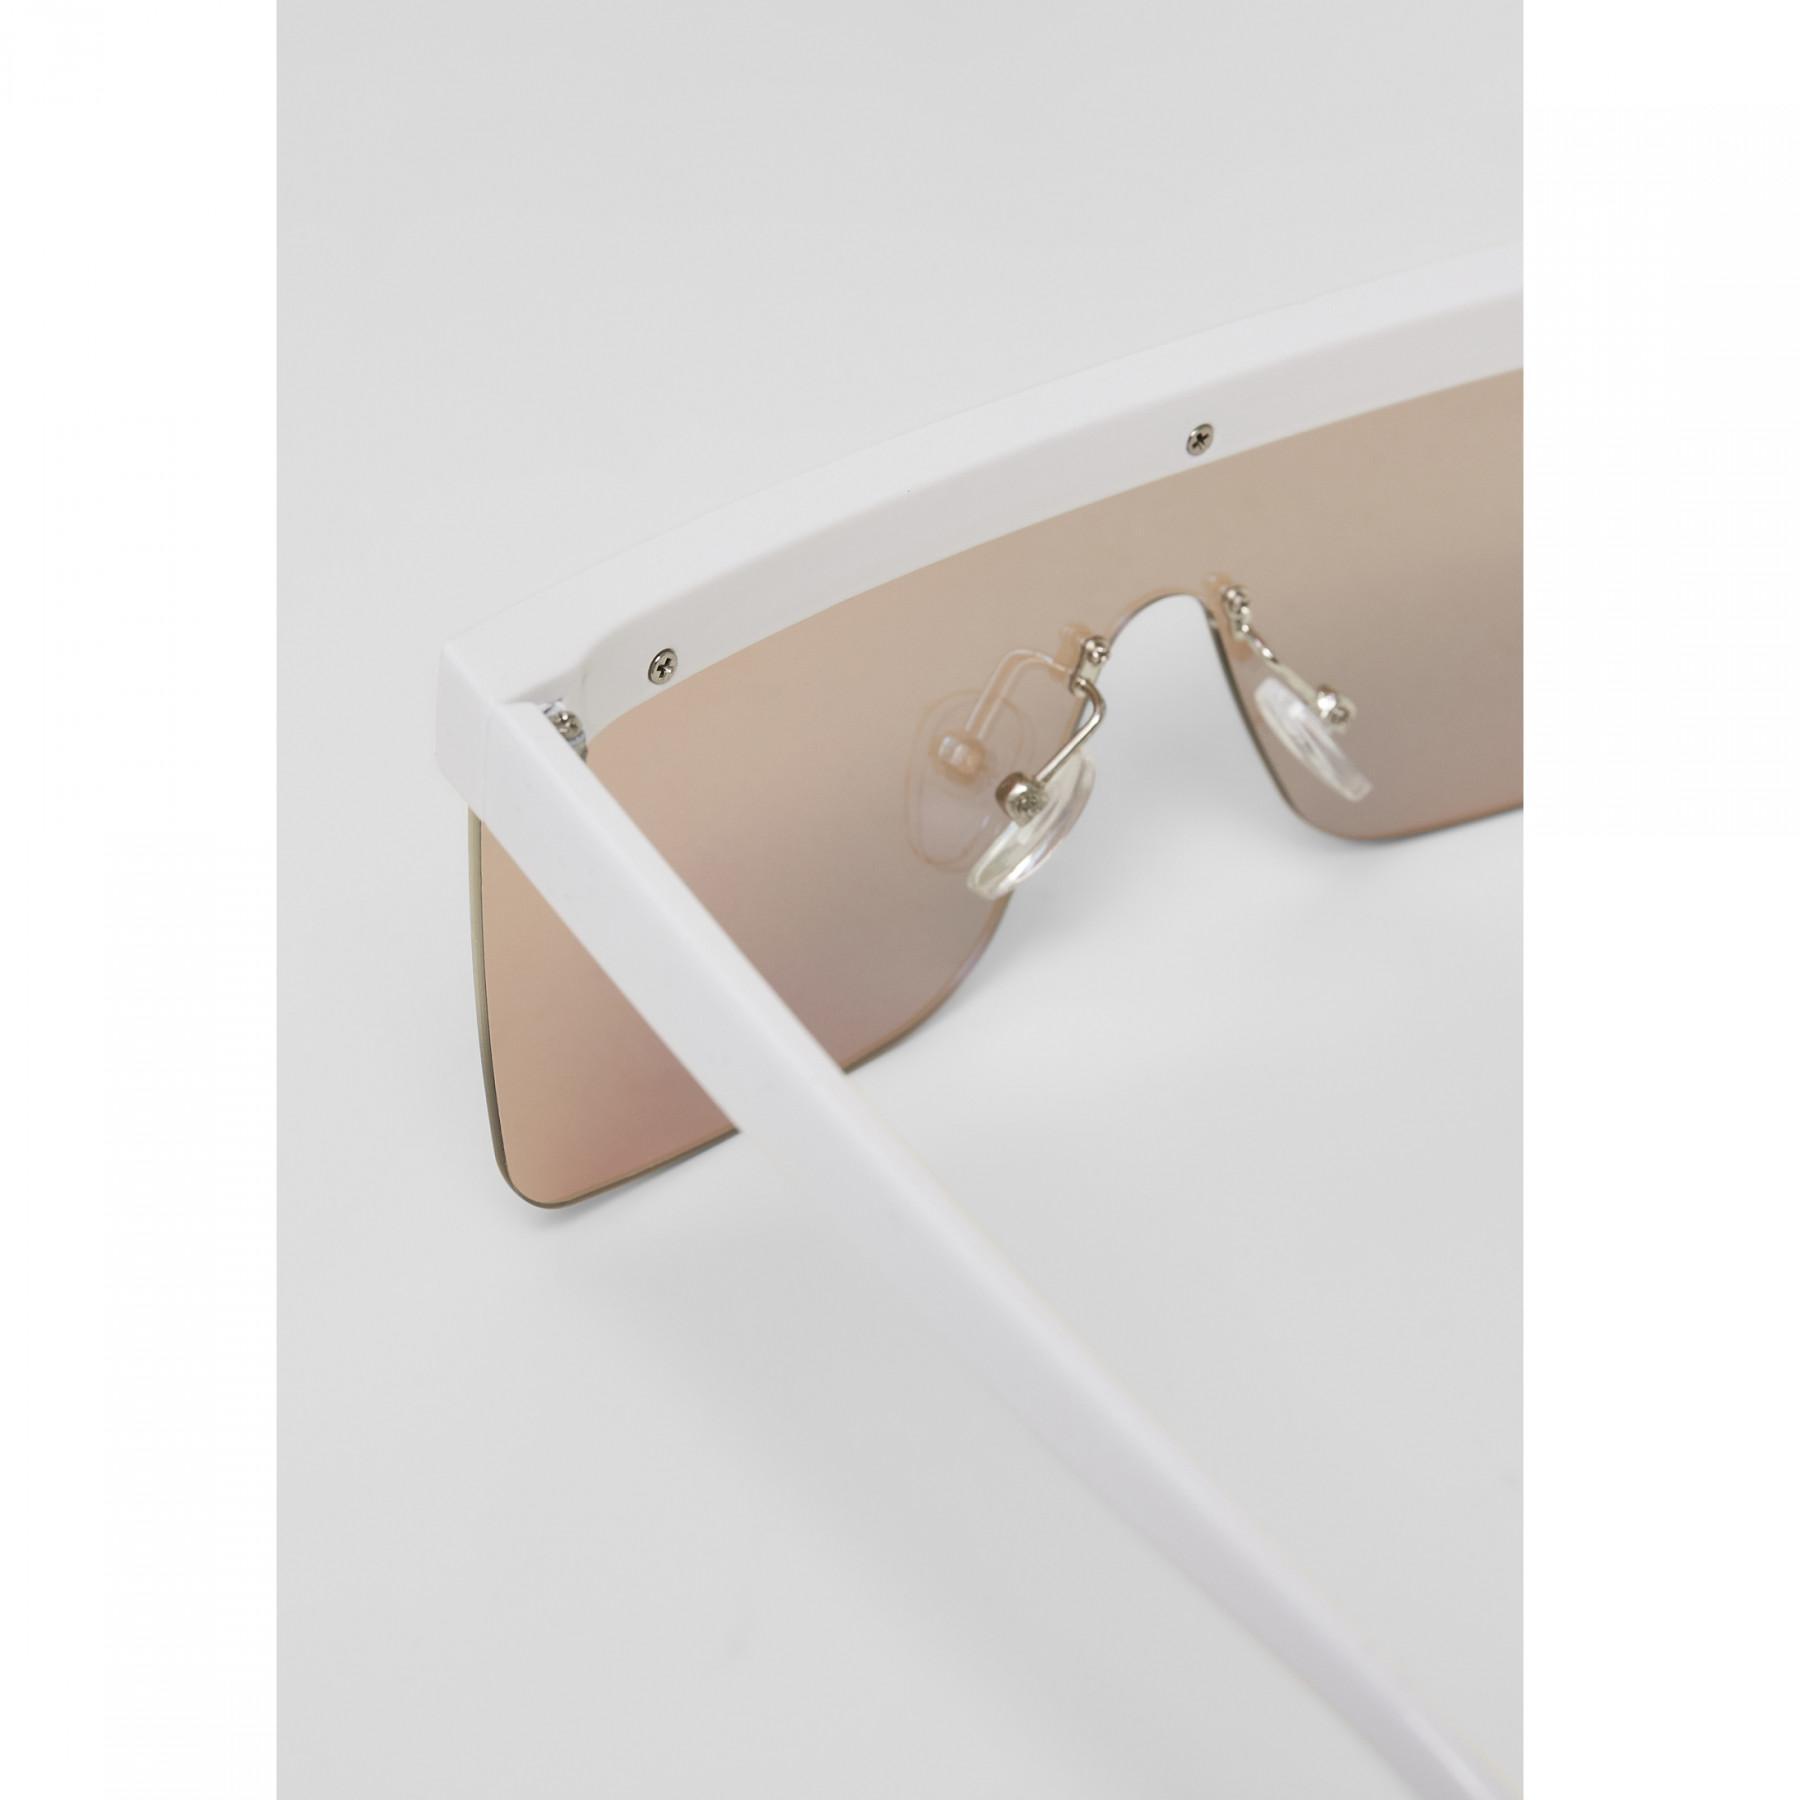 Urban classic rhodos sunglasses (x2) 